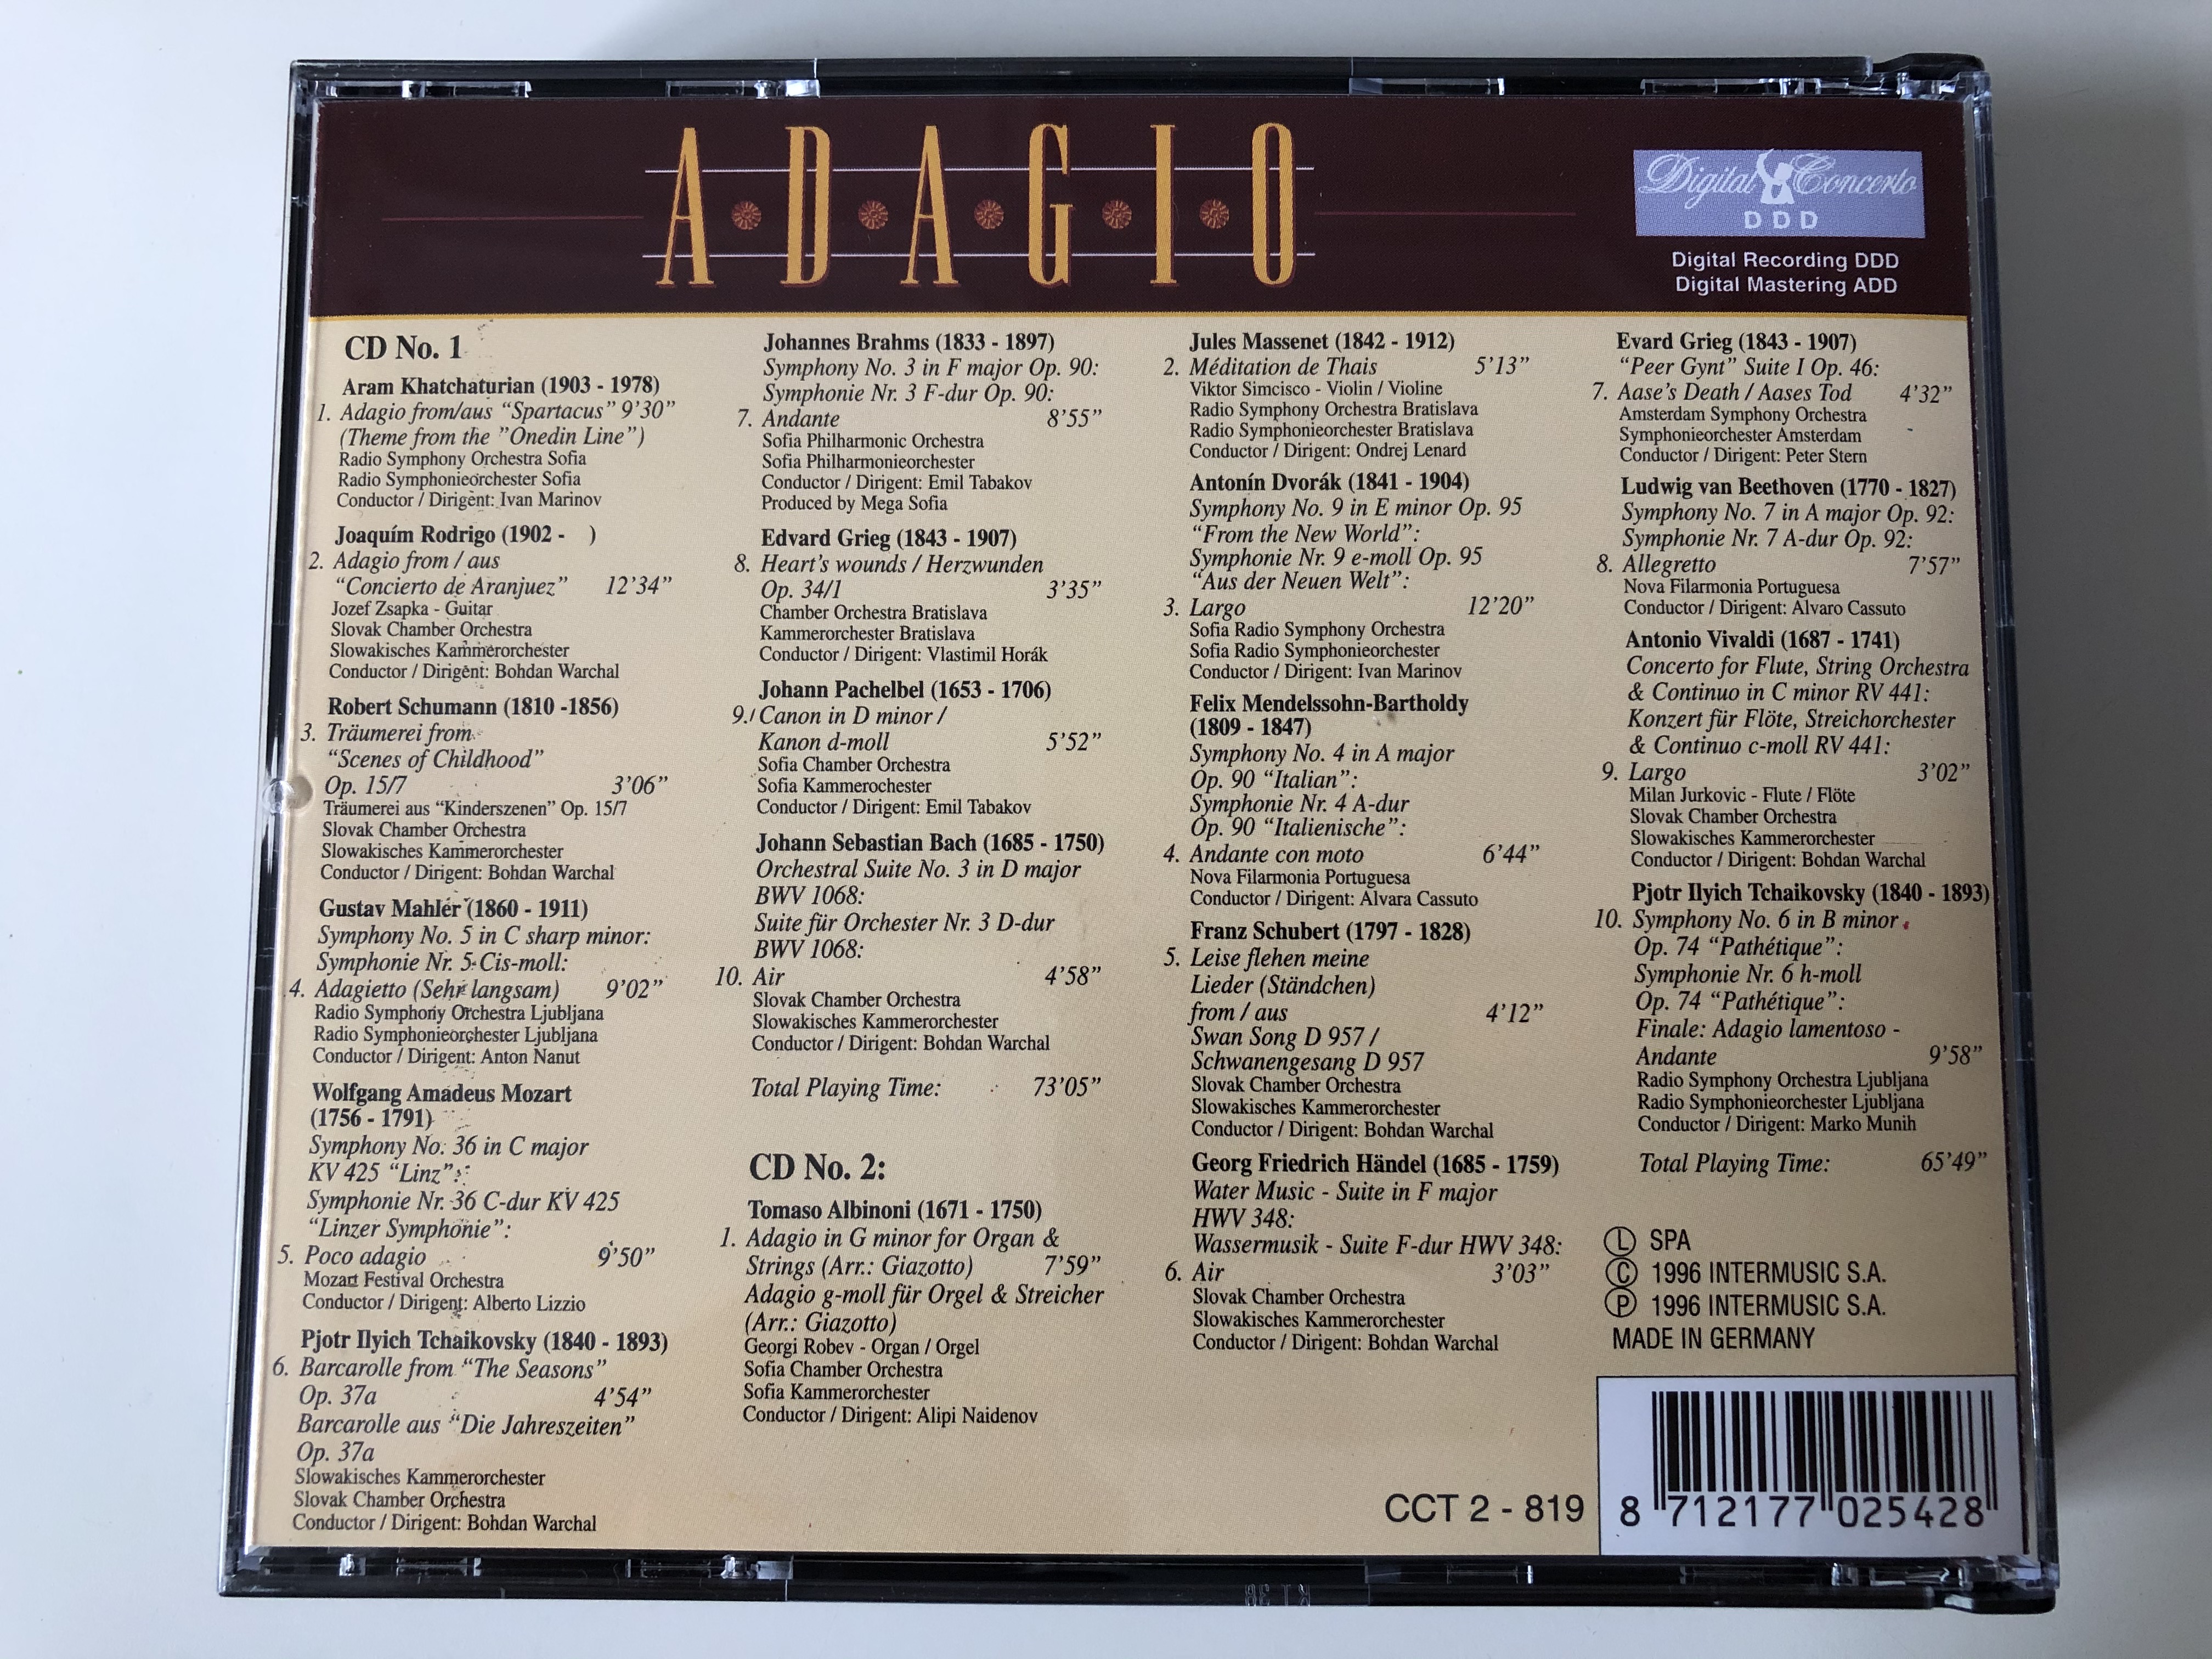 adagio-adagio-from-spartacus-theme-from-the-onedin-line-khatchaturian-concierto-de-aranjuez-adagio-rodrigo-air-bach-traumerei-schumann-adagio-albinoni-stanchen-schub-4-.jpg